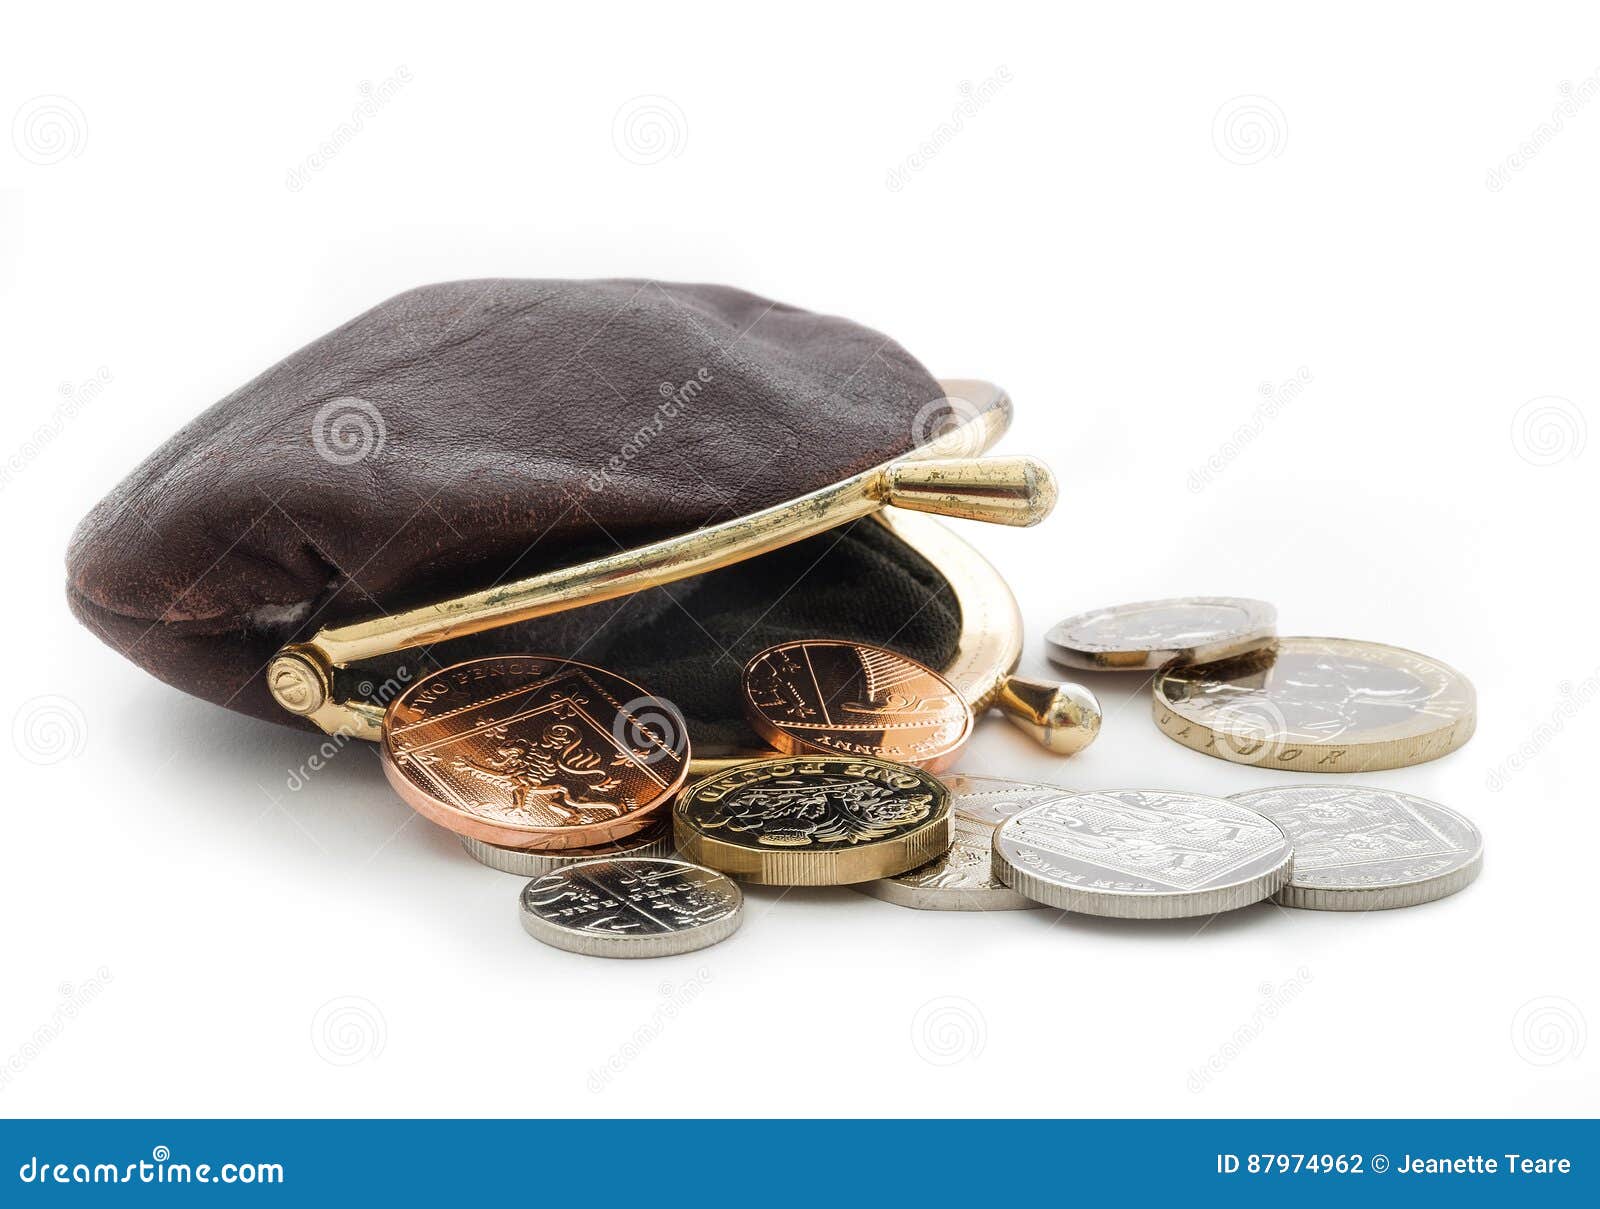 Fashion Lady Women PU Leather Clutch Wallet Elegant Mini Card Holder Case Coin  Purse Female Ladies Money Bag Handbag From Wholesalervip01, $34.59 |  DHgate.Com